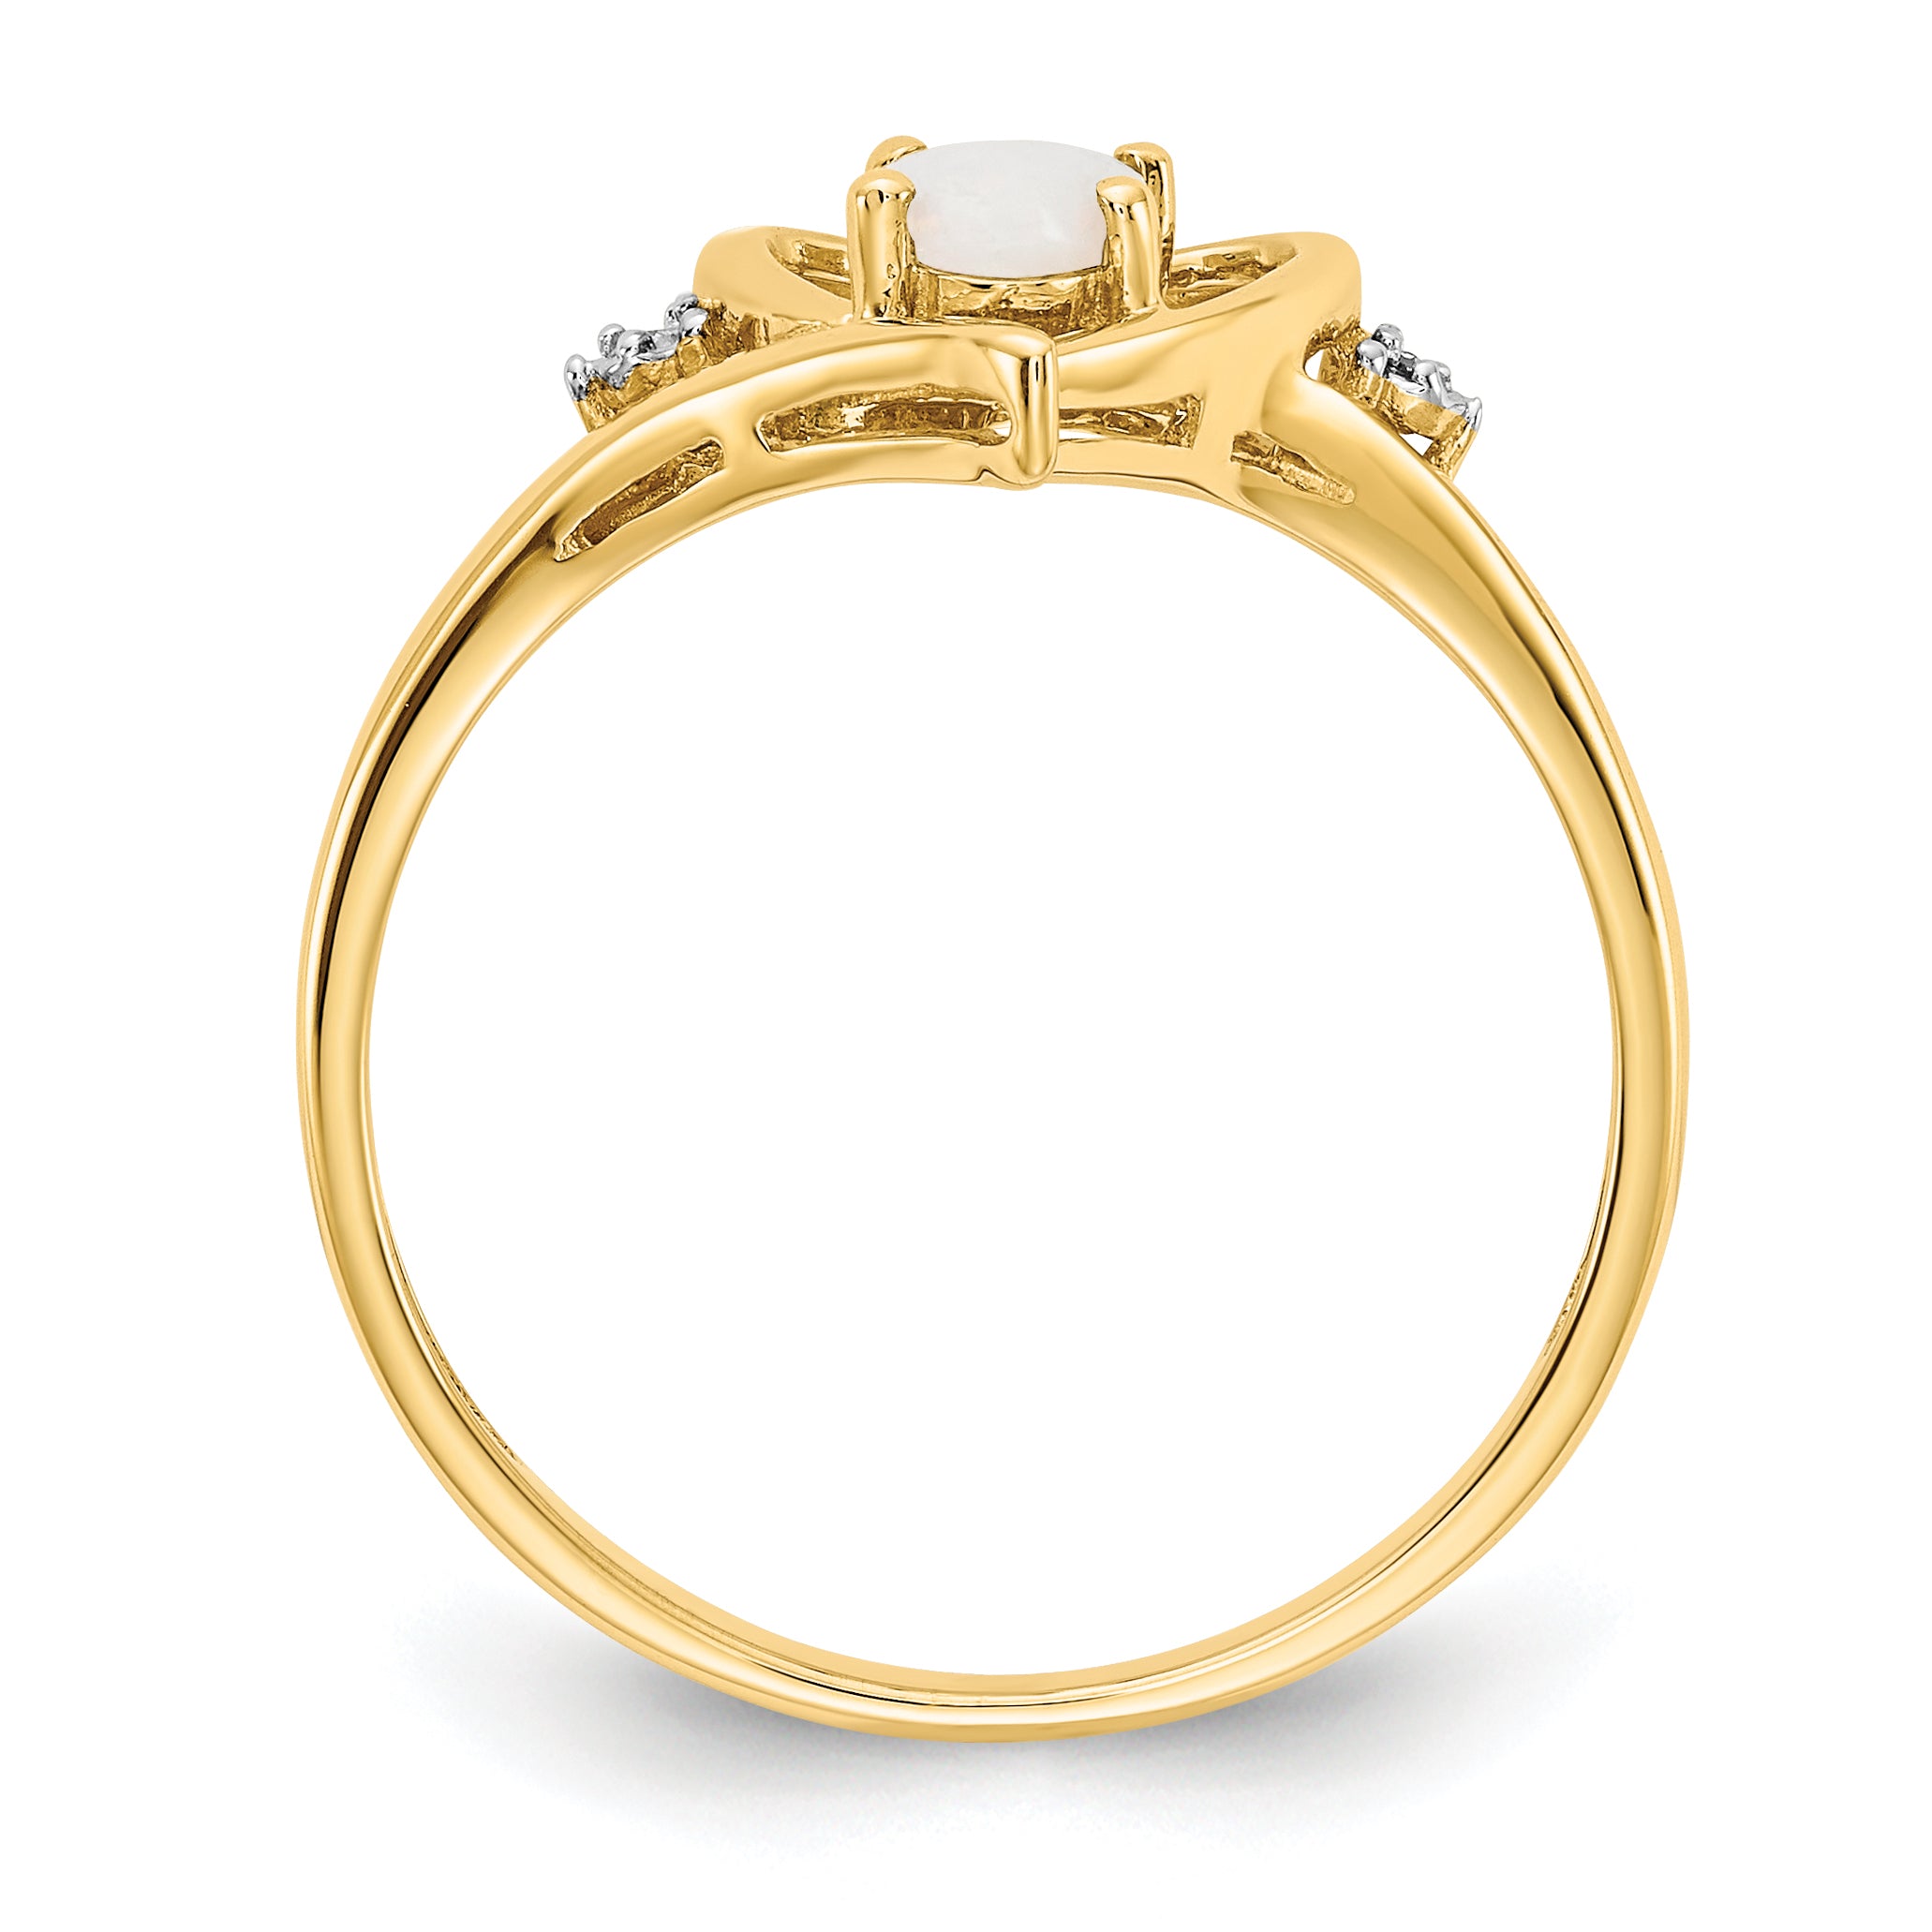 14k Opal and Diamond Heart Ring